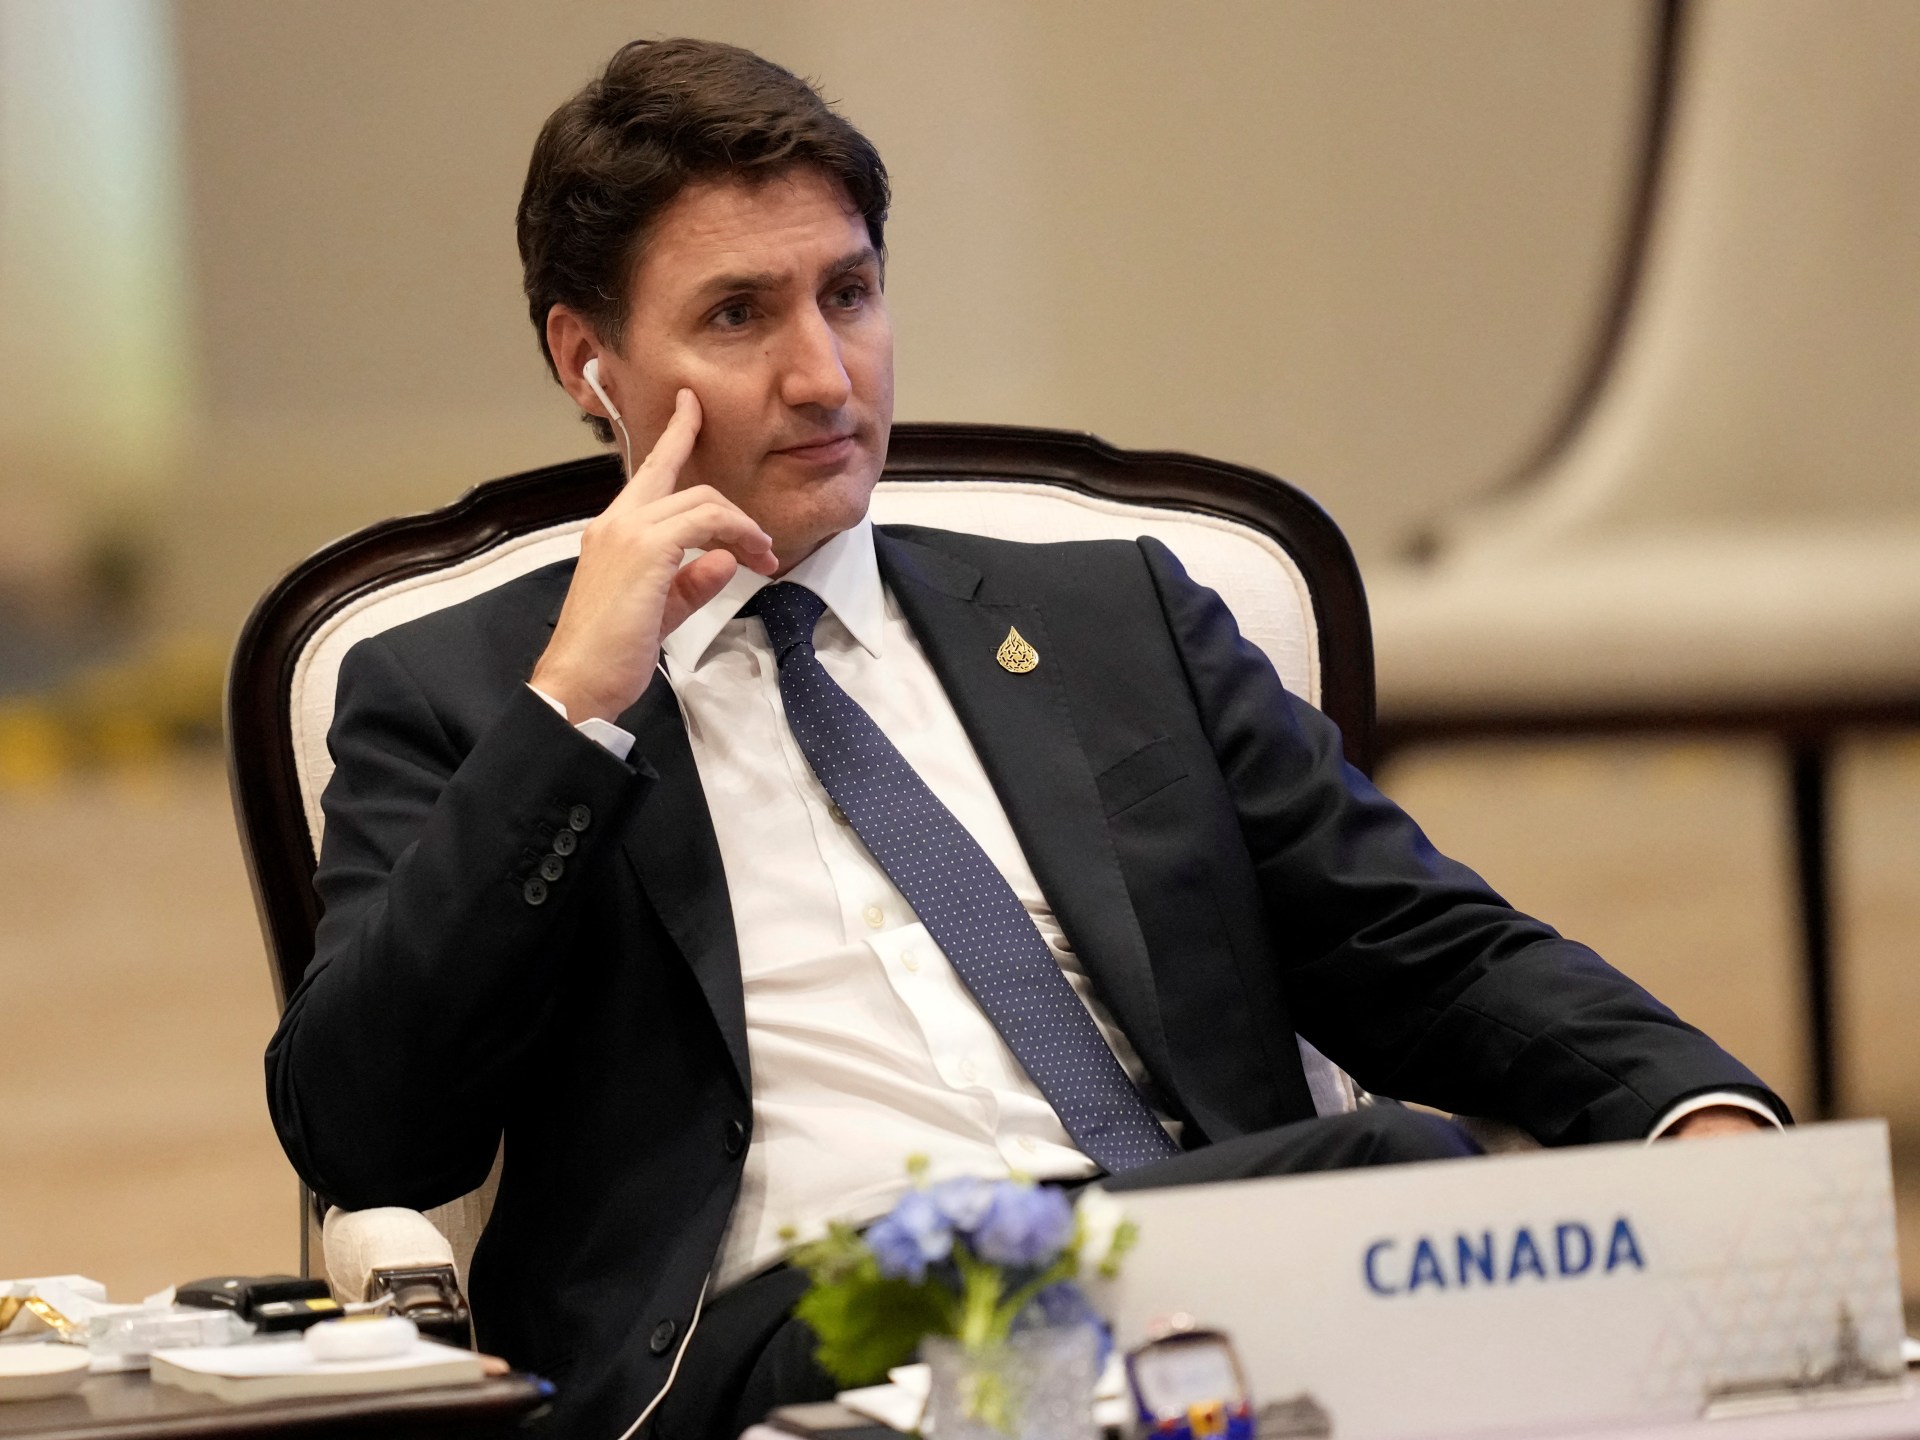 Canada and Saudi Arabia rekindle diplomatic ties after 2018 spat | Political news